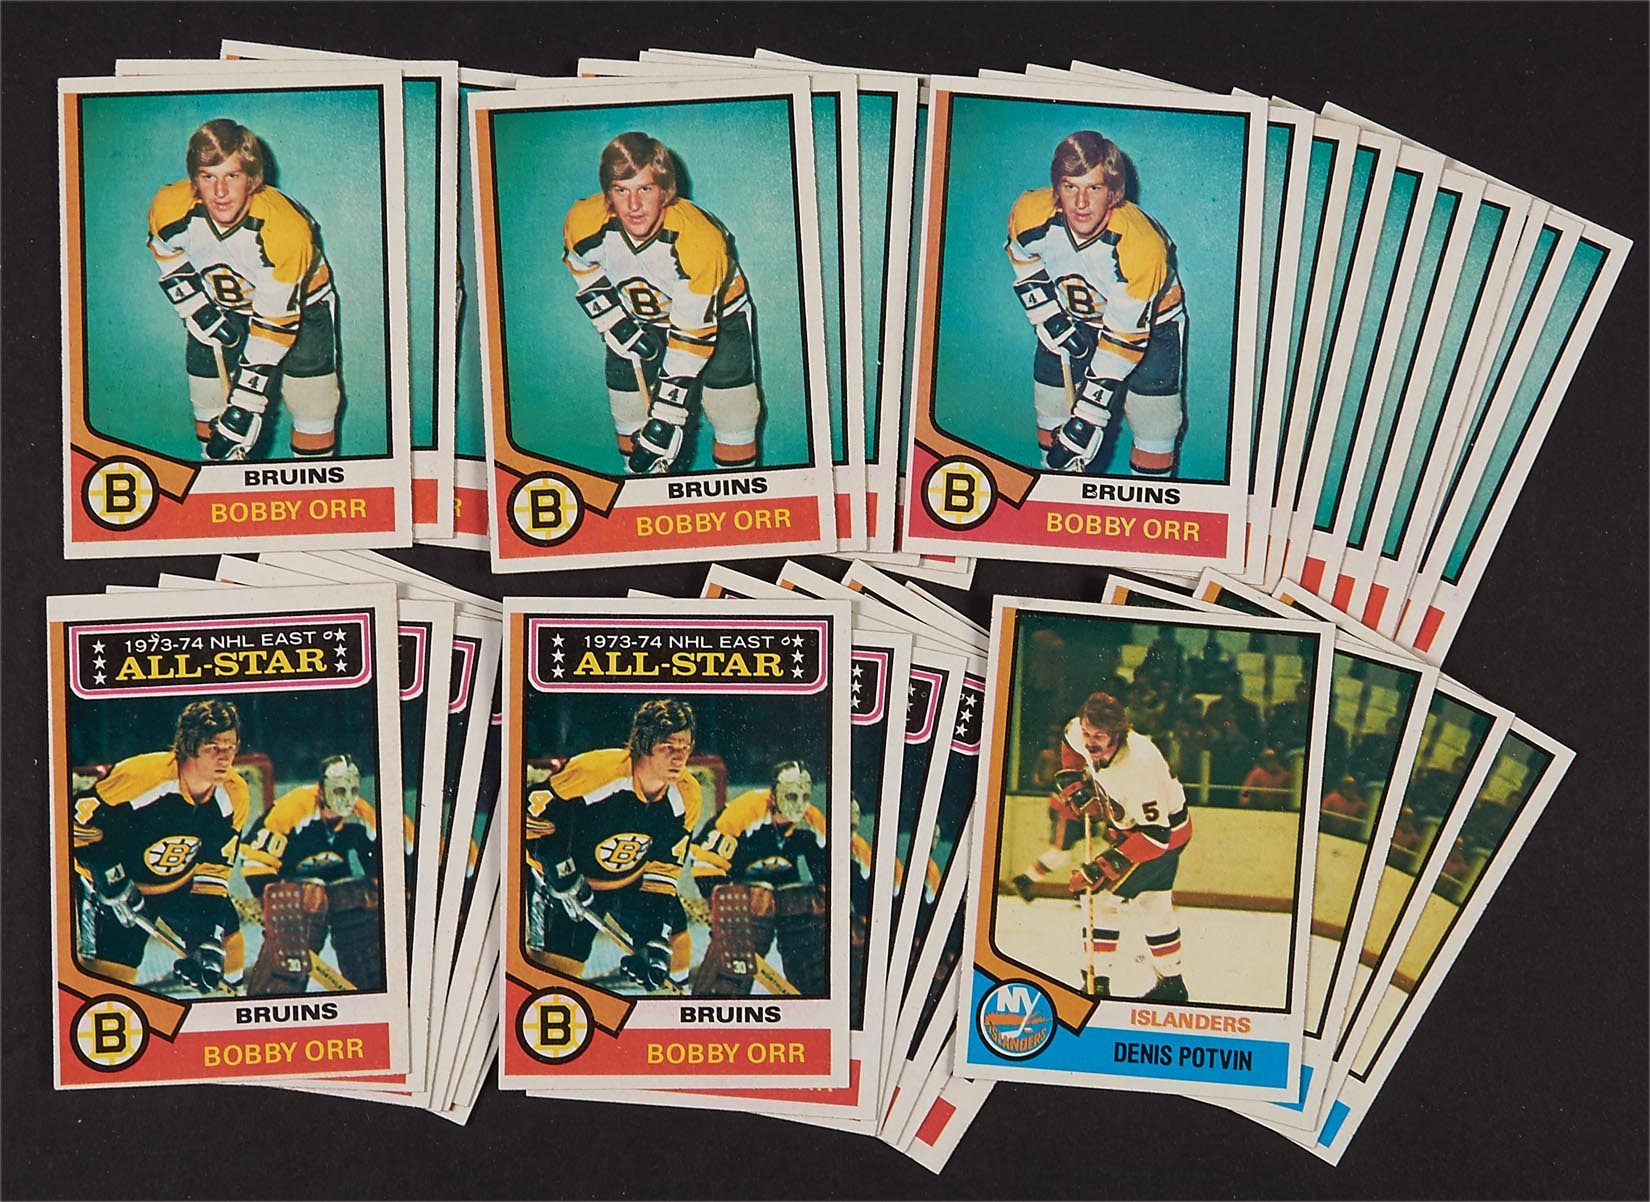 1974-75 Topps Hockey High Grade Cards from Vending (15,000+ cards)